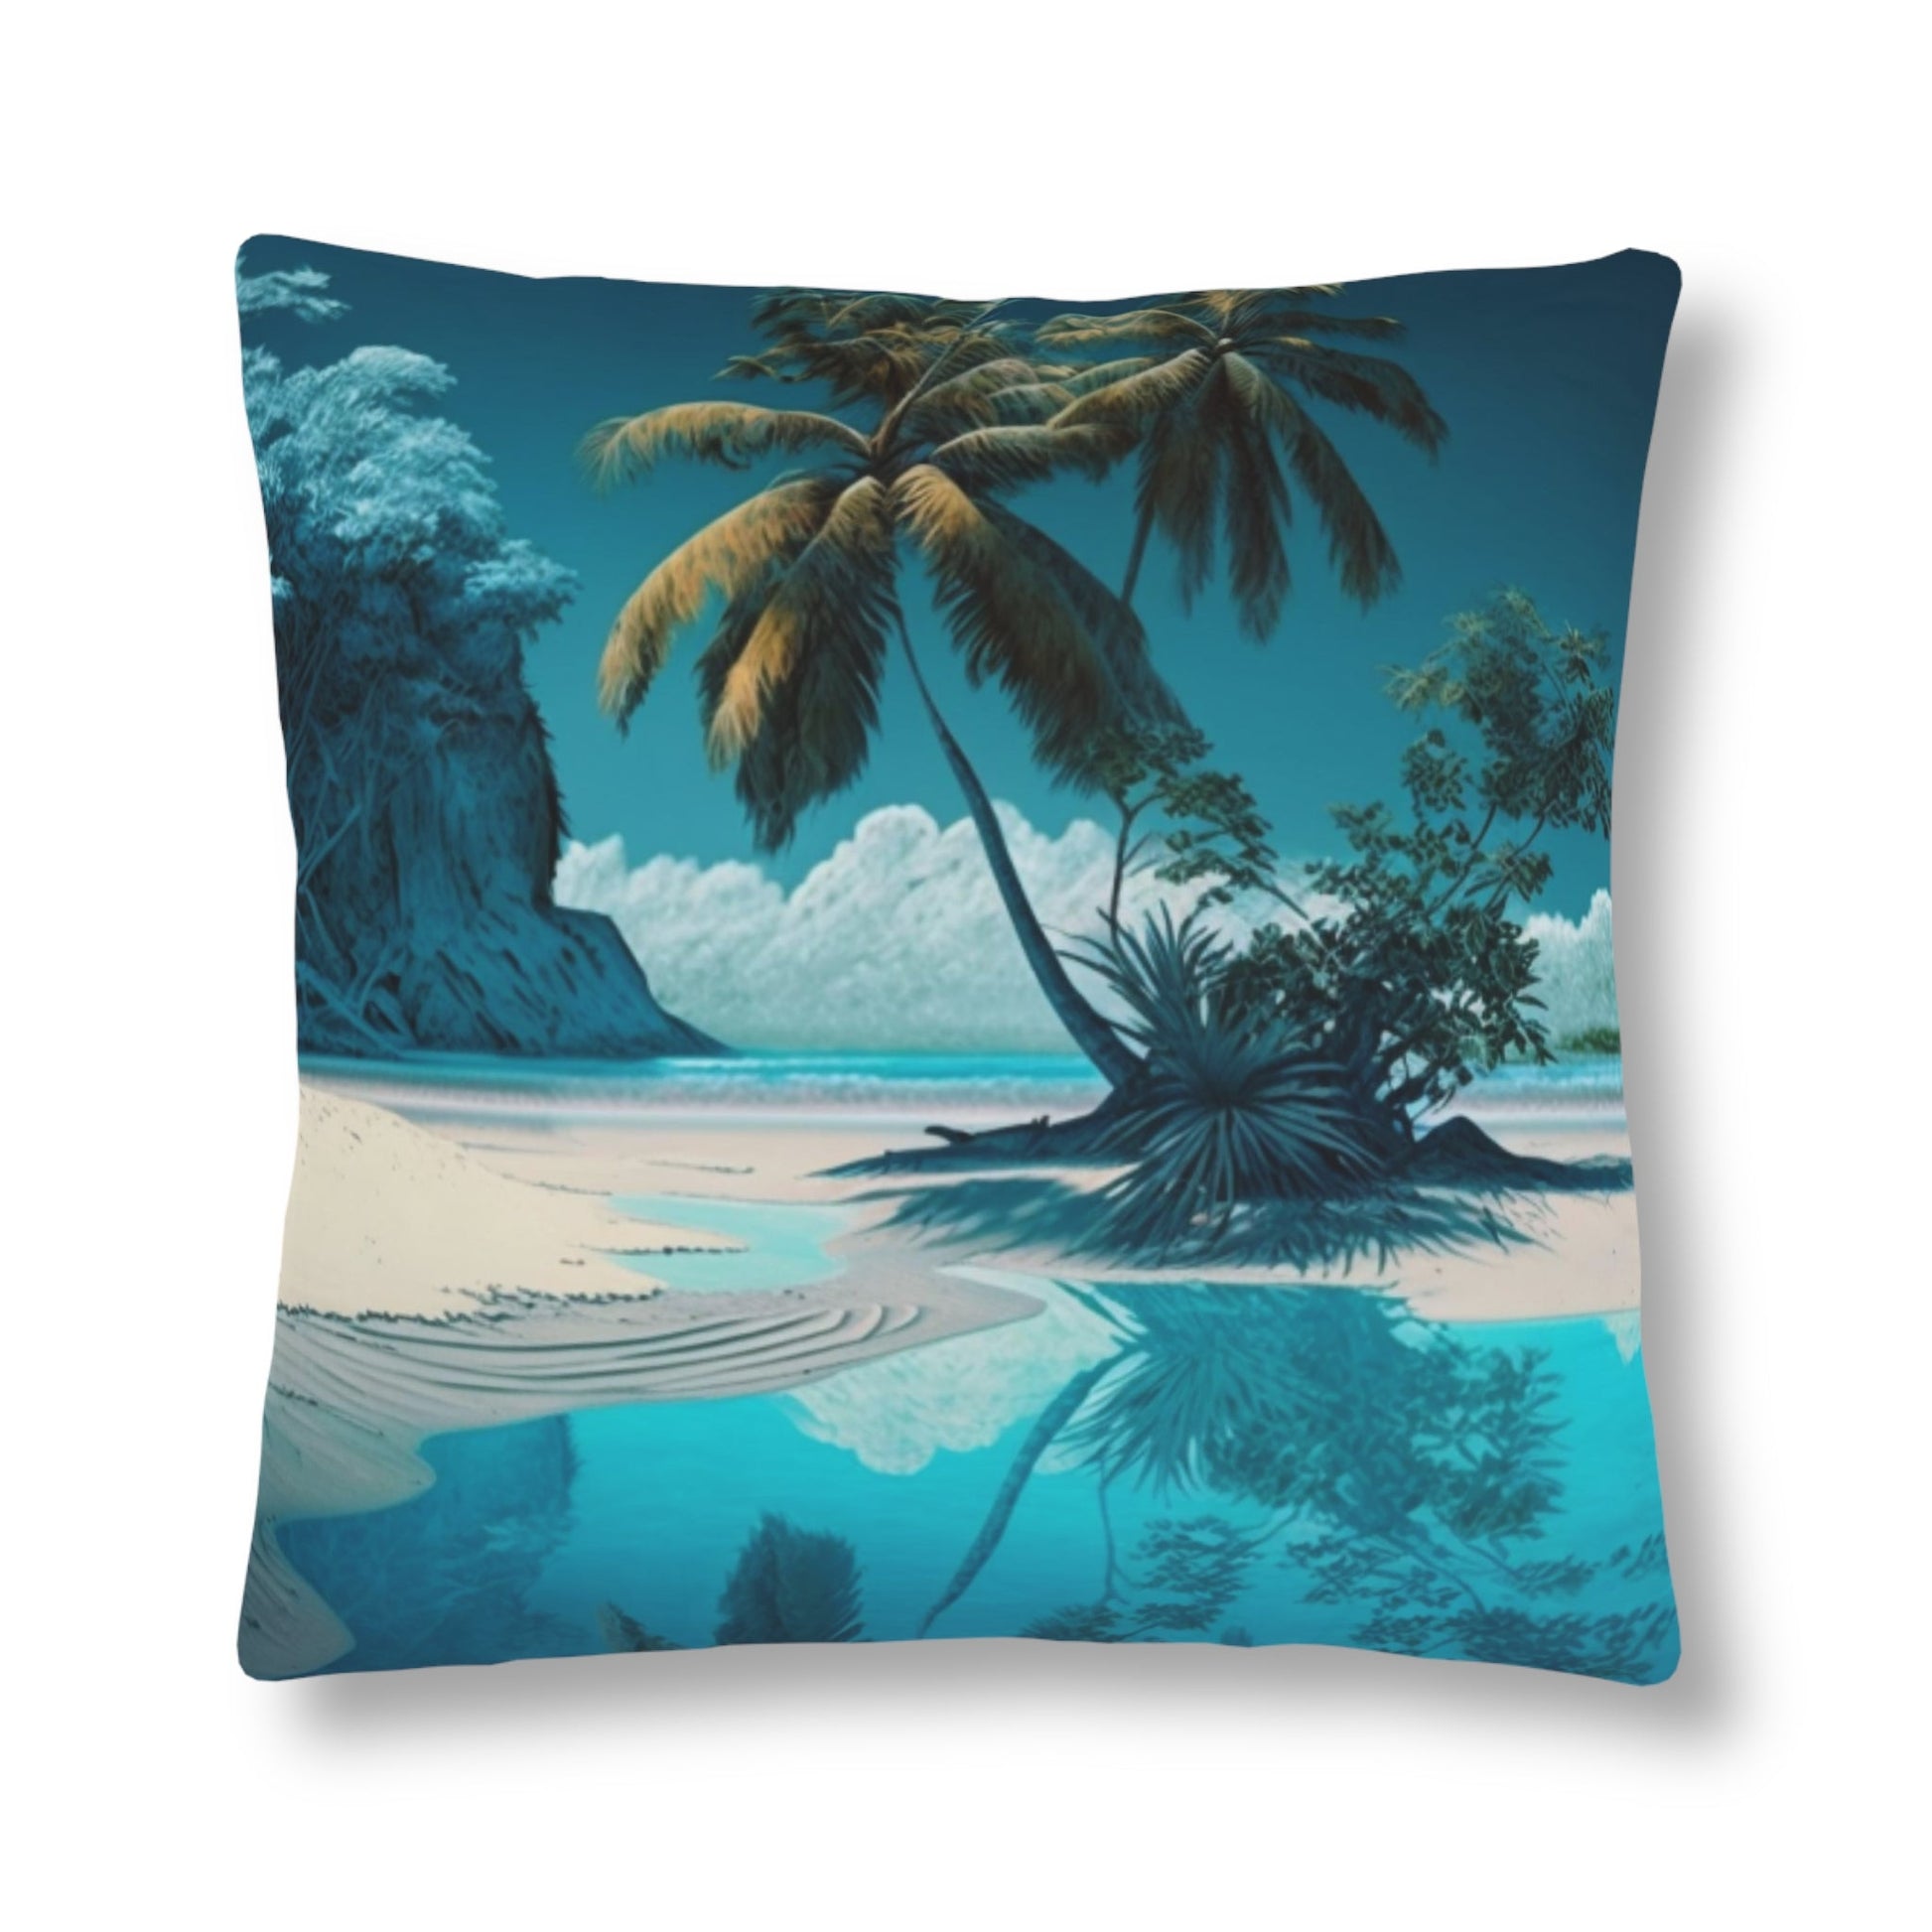 Home Decor - Tropical Hideaway Waterproof Pillows